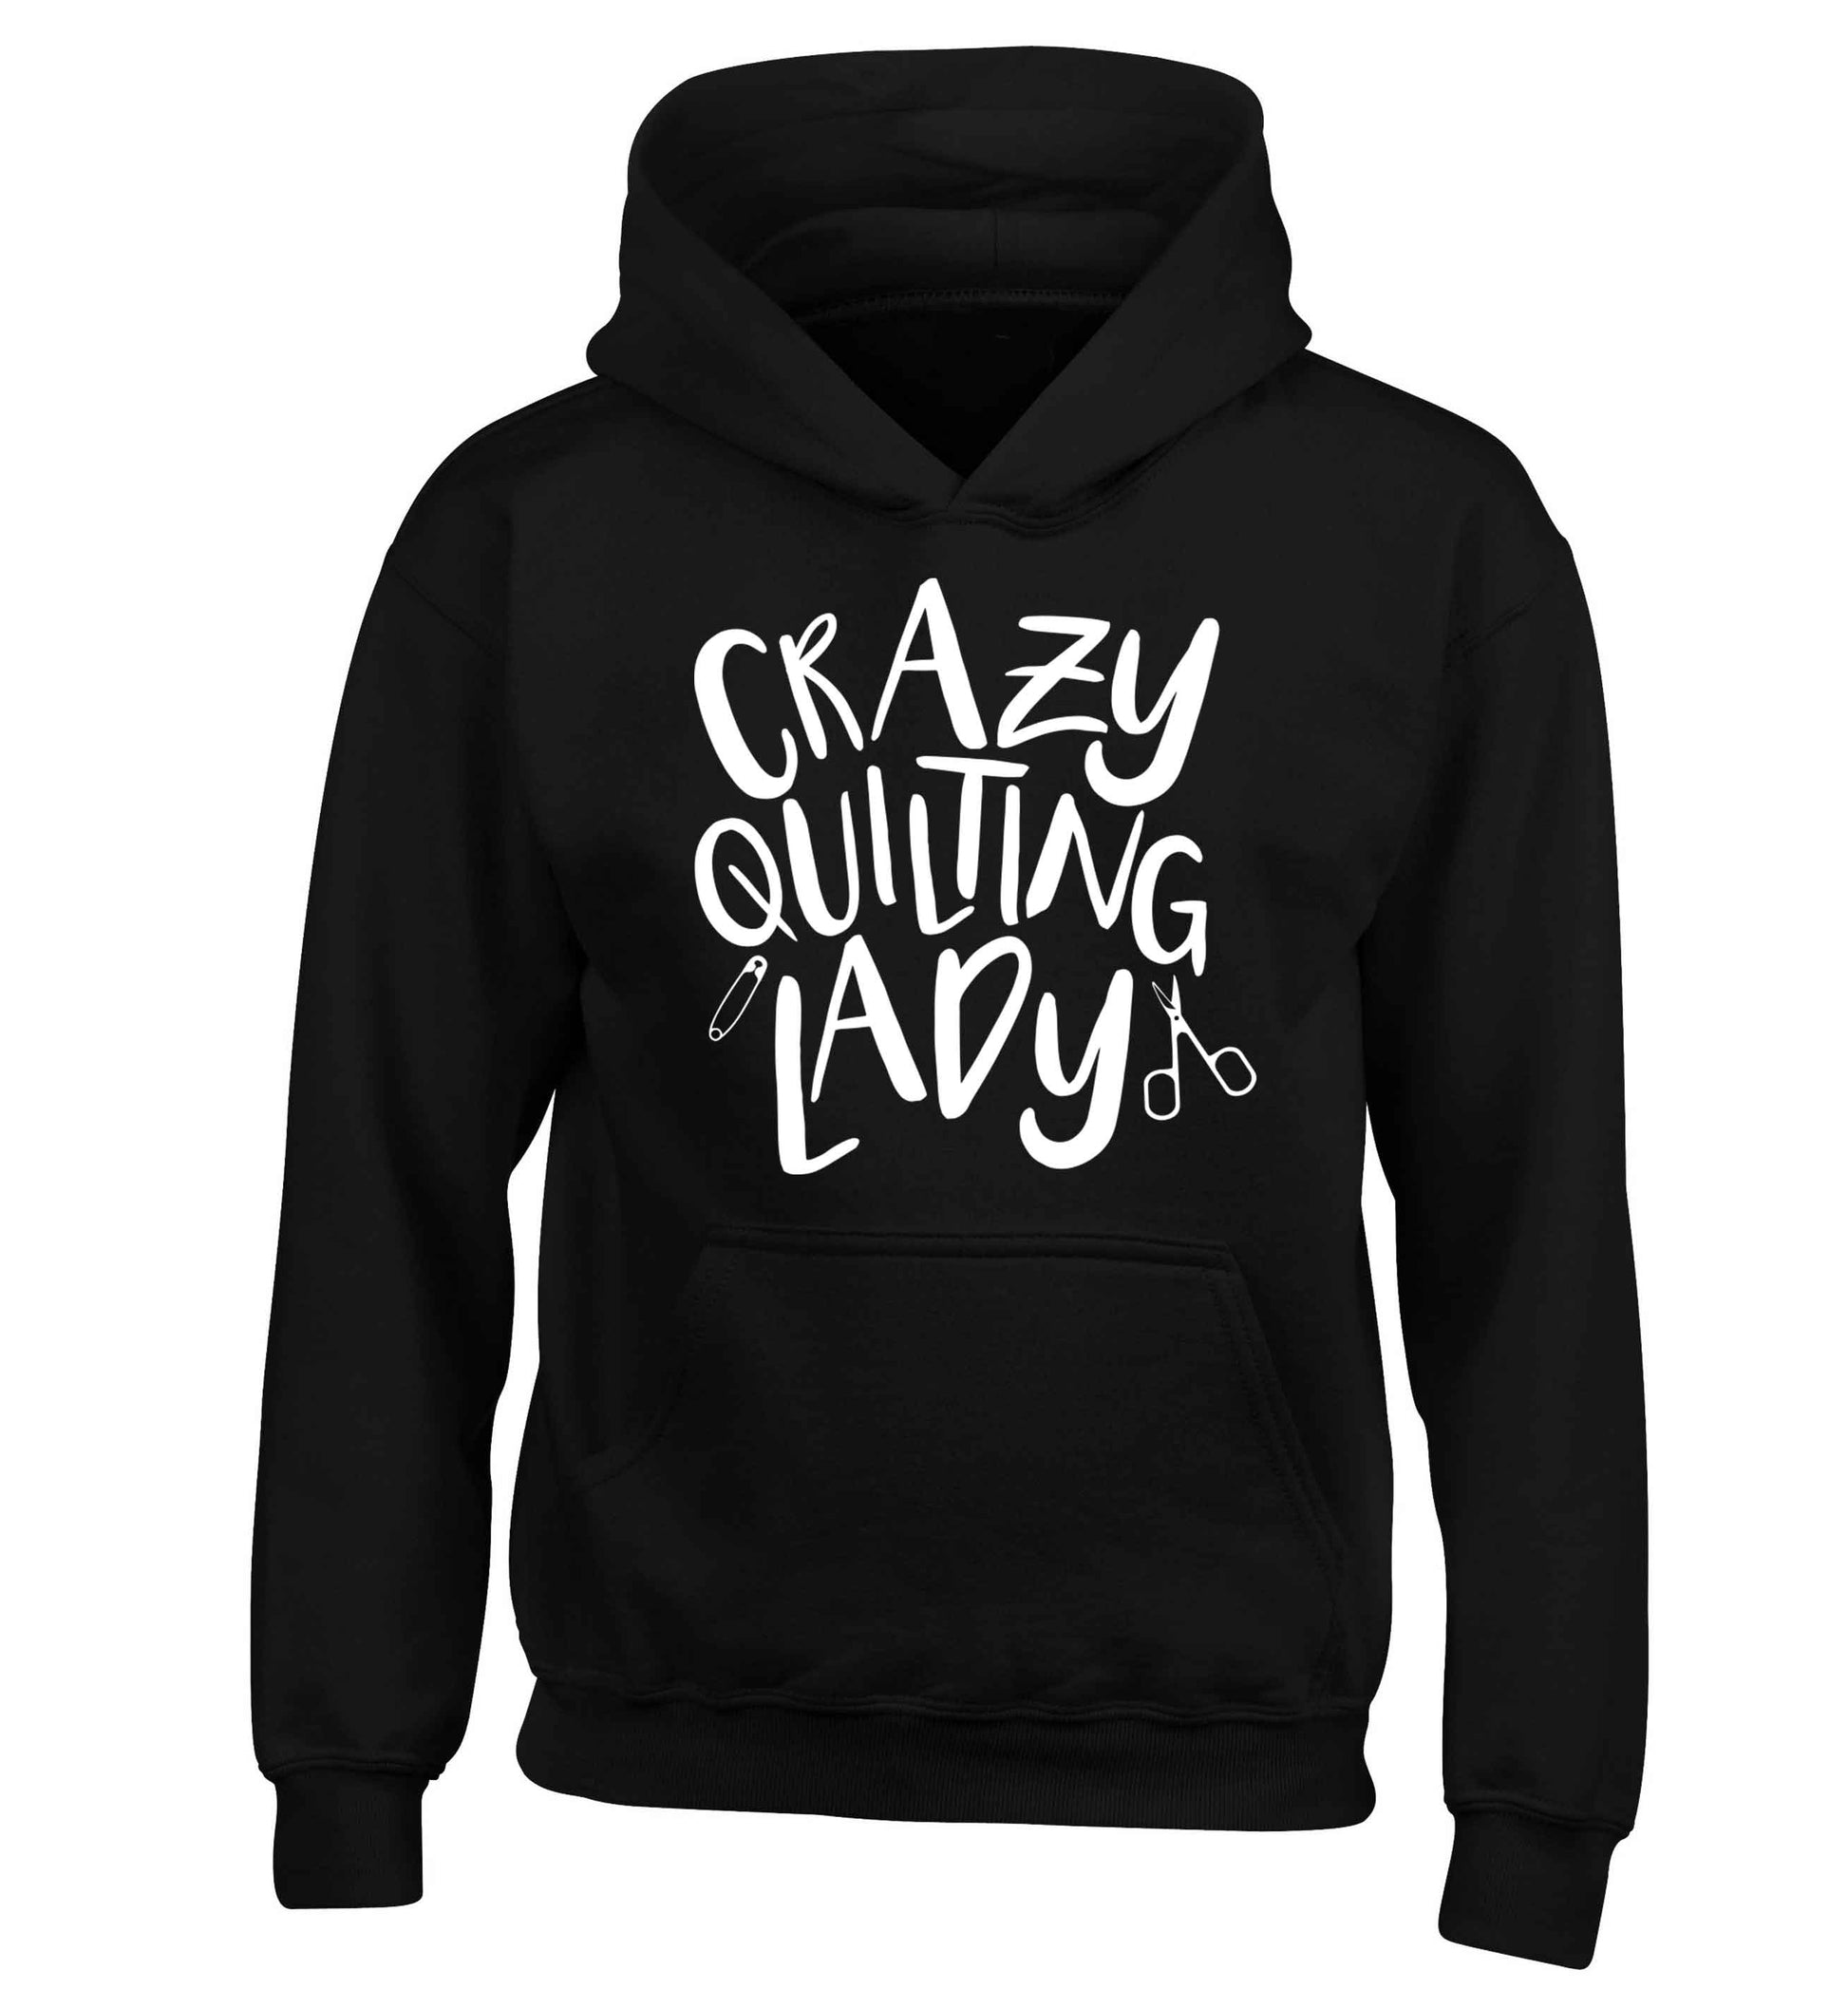 Crazy quilting lady children's black hoodie 12-13 Years